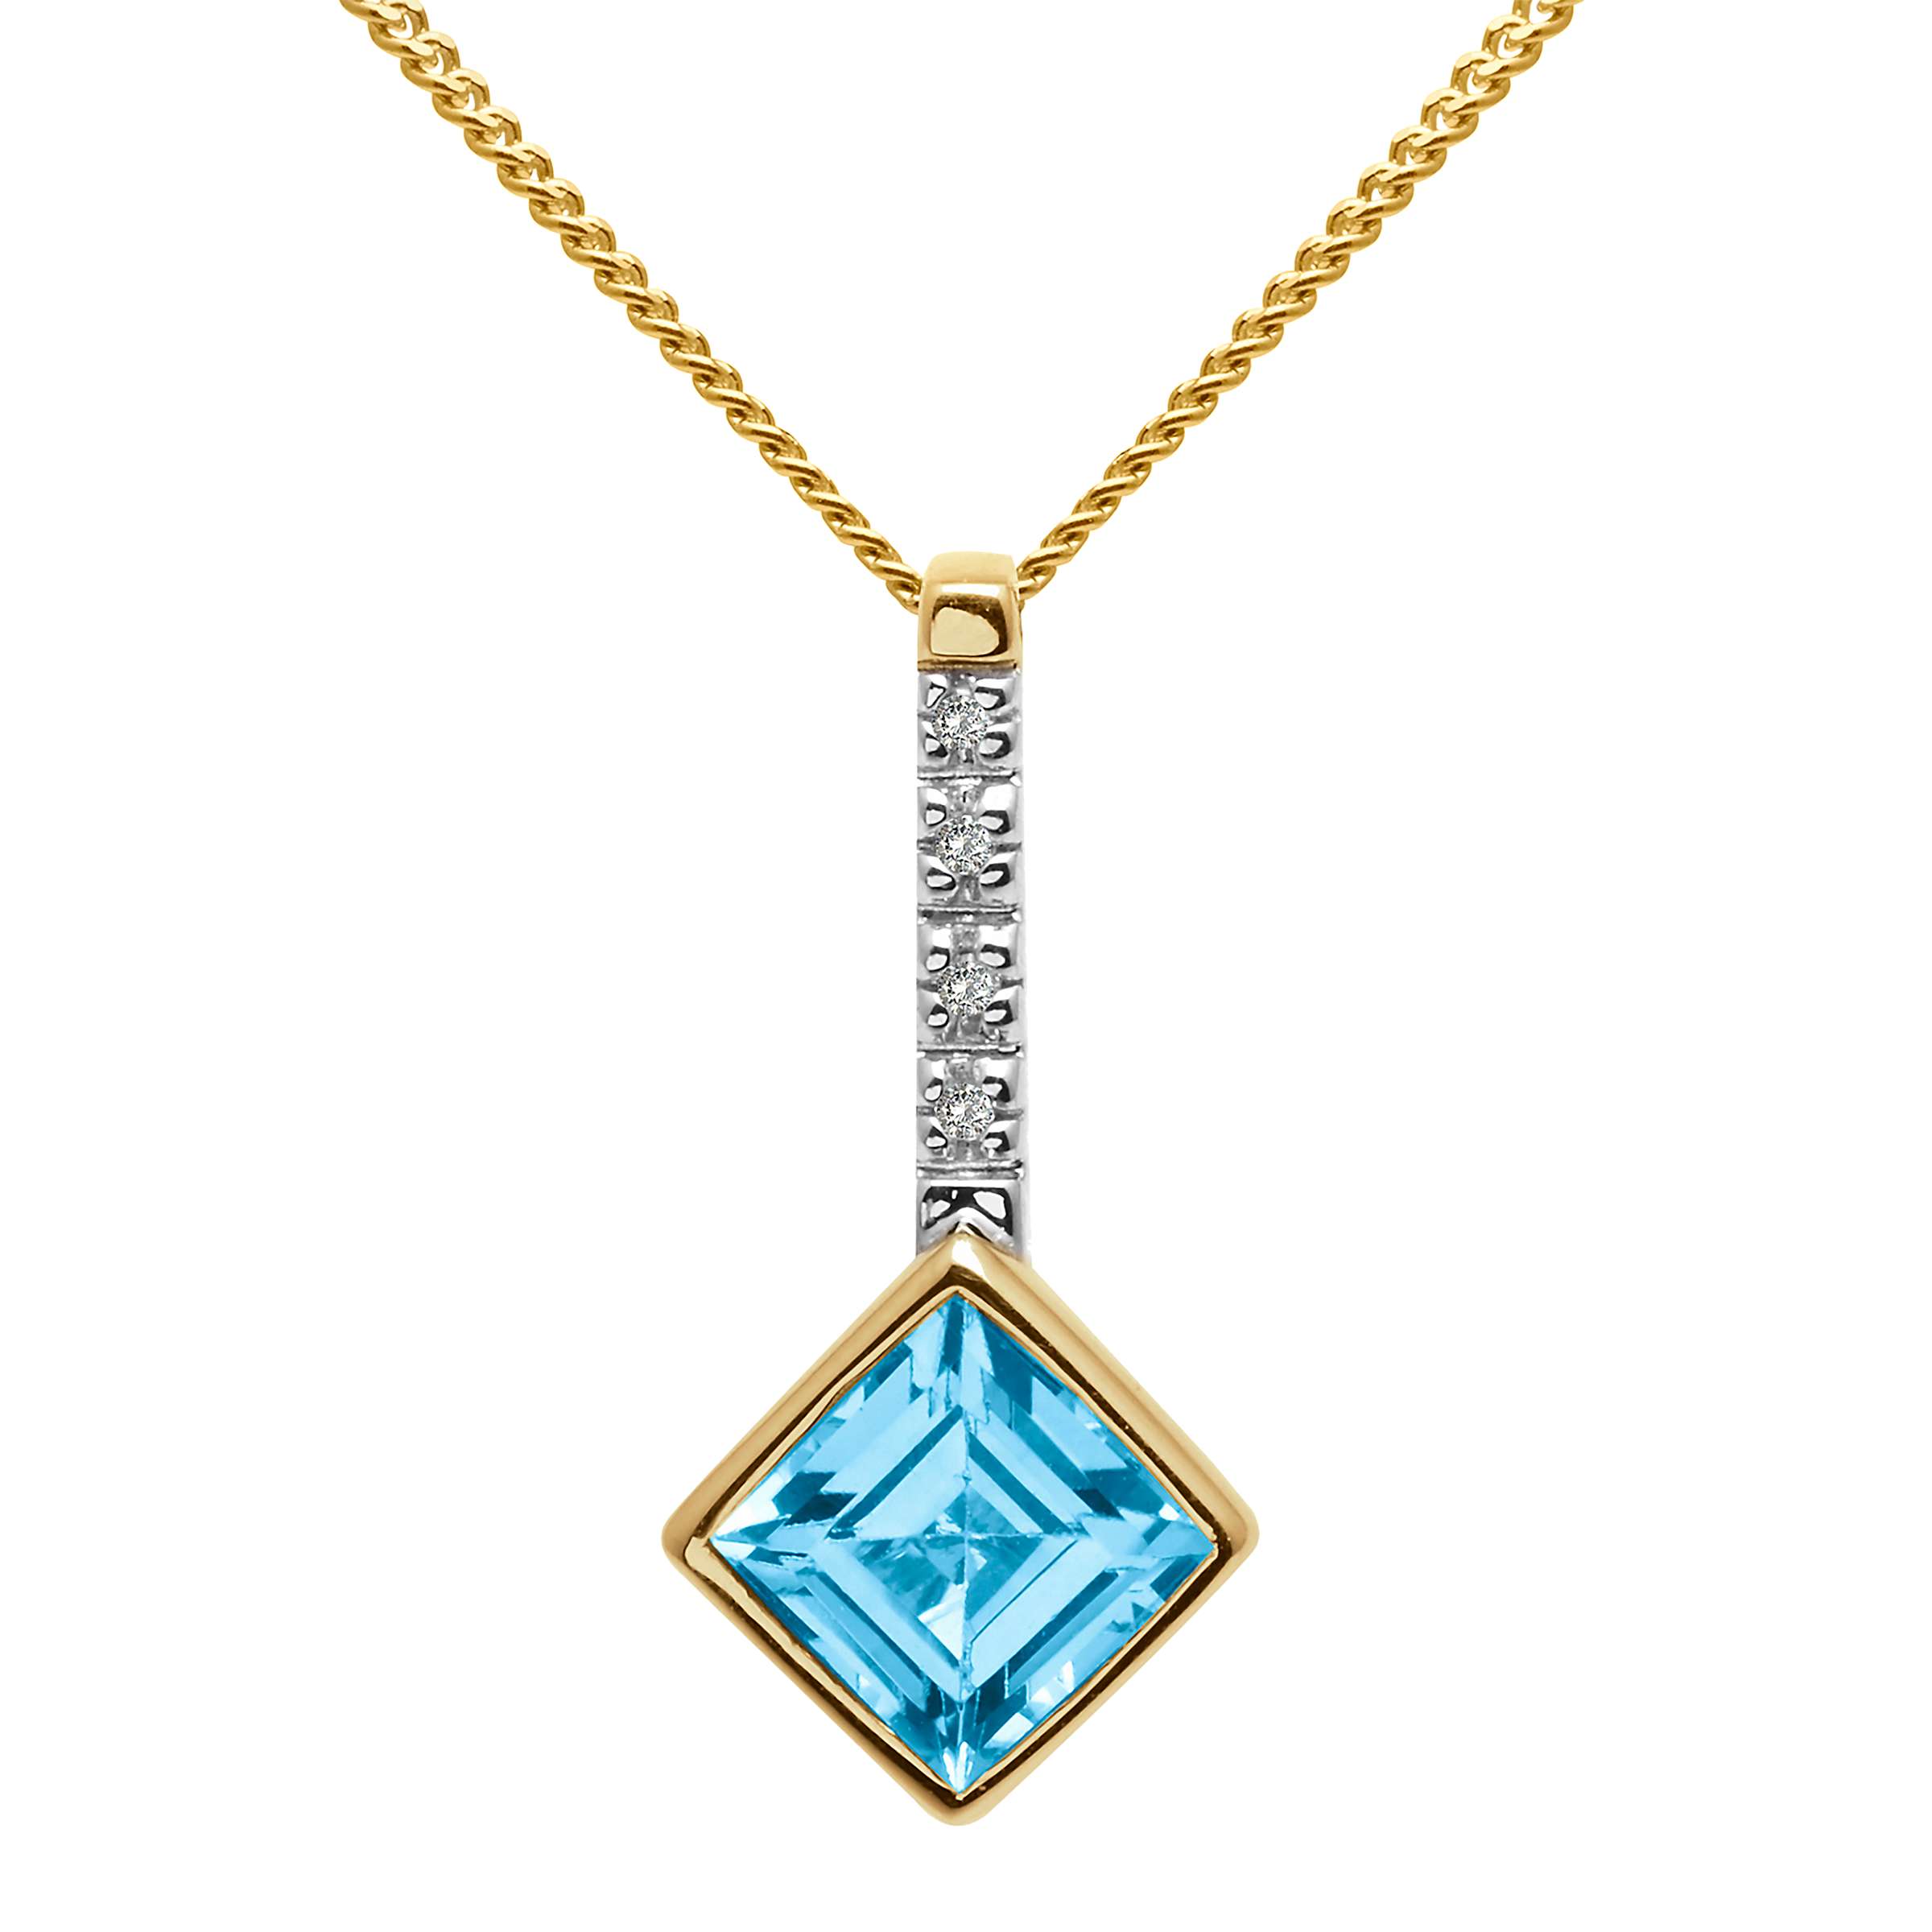 Buy A B Davis 9ct Gold Princess Cut Semi Precious Stone and Diamond Pendant Necklace, Blue Topaz Online at johnlewis.com